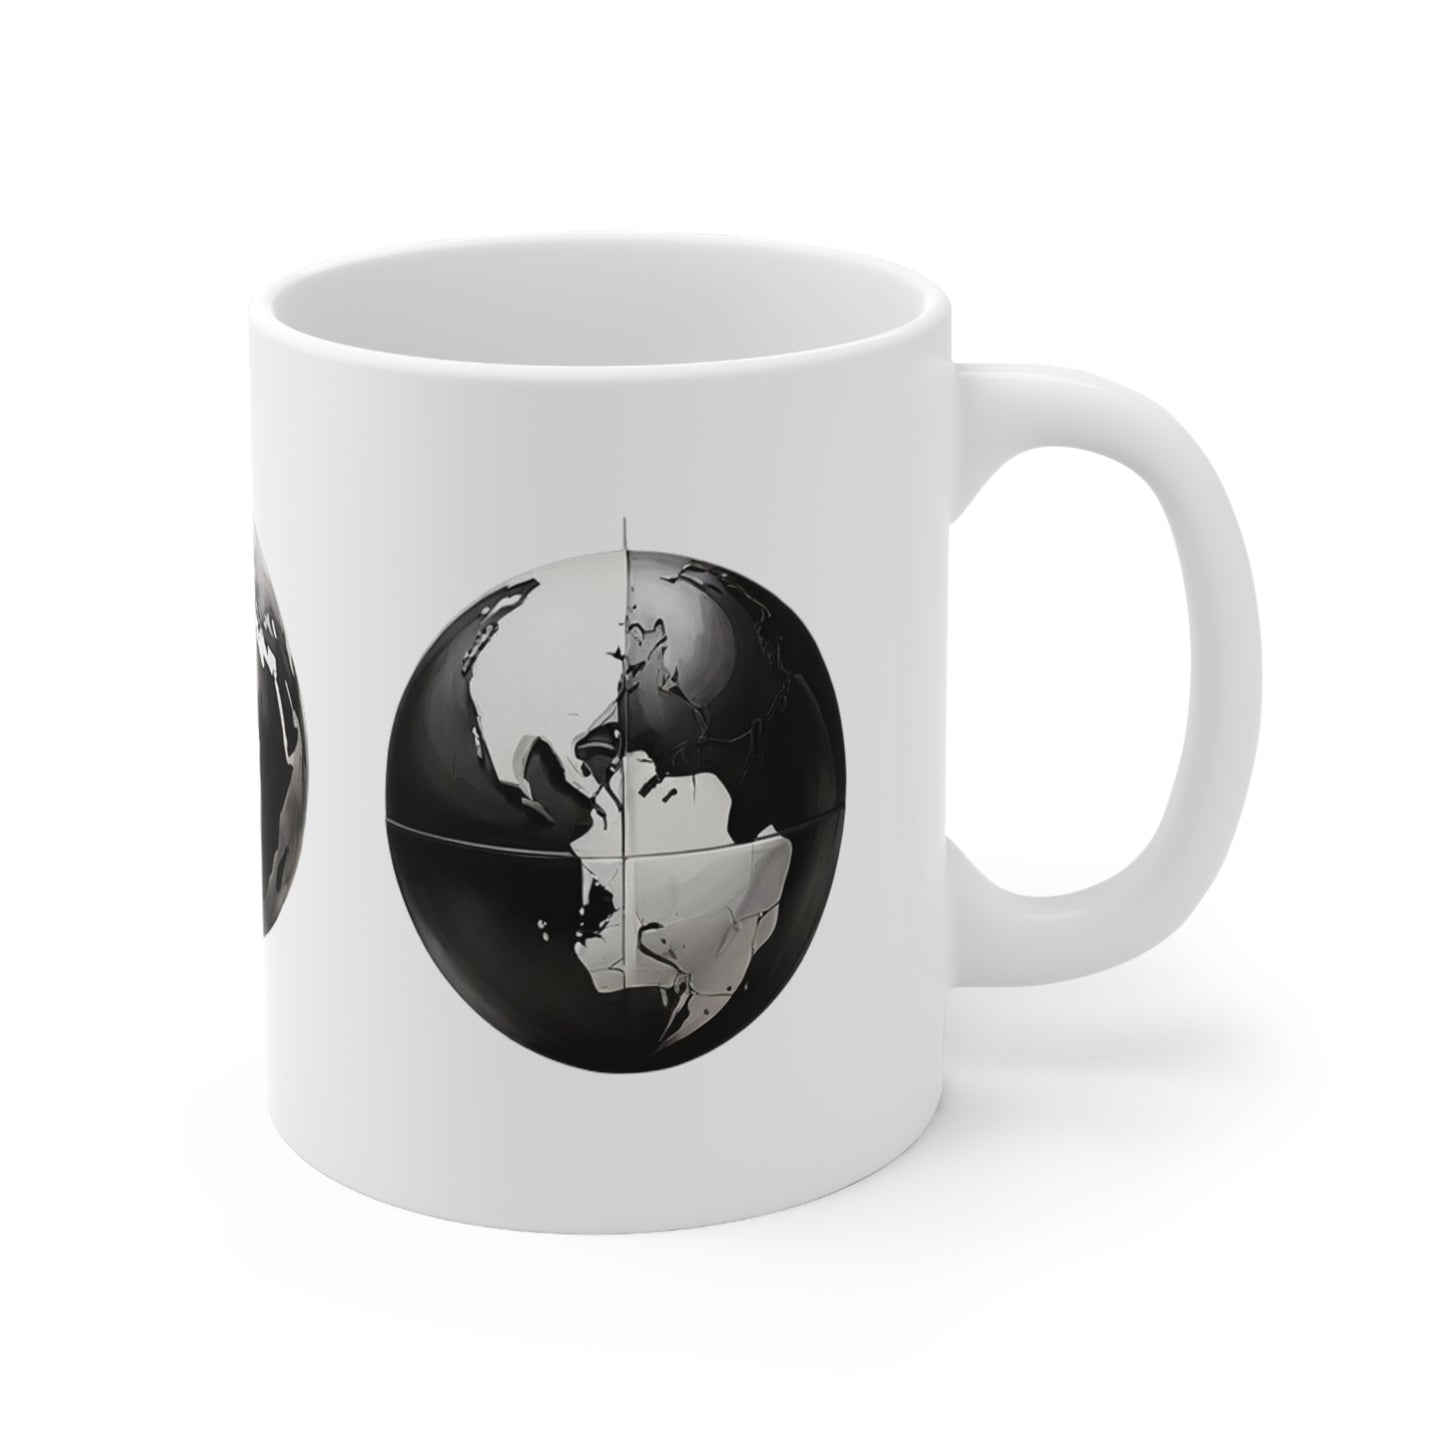 Black and White World Globe Mug - Ceramic Coffee Mug 11oz